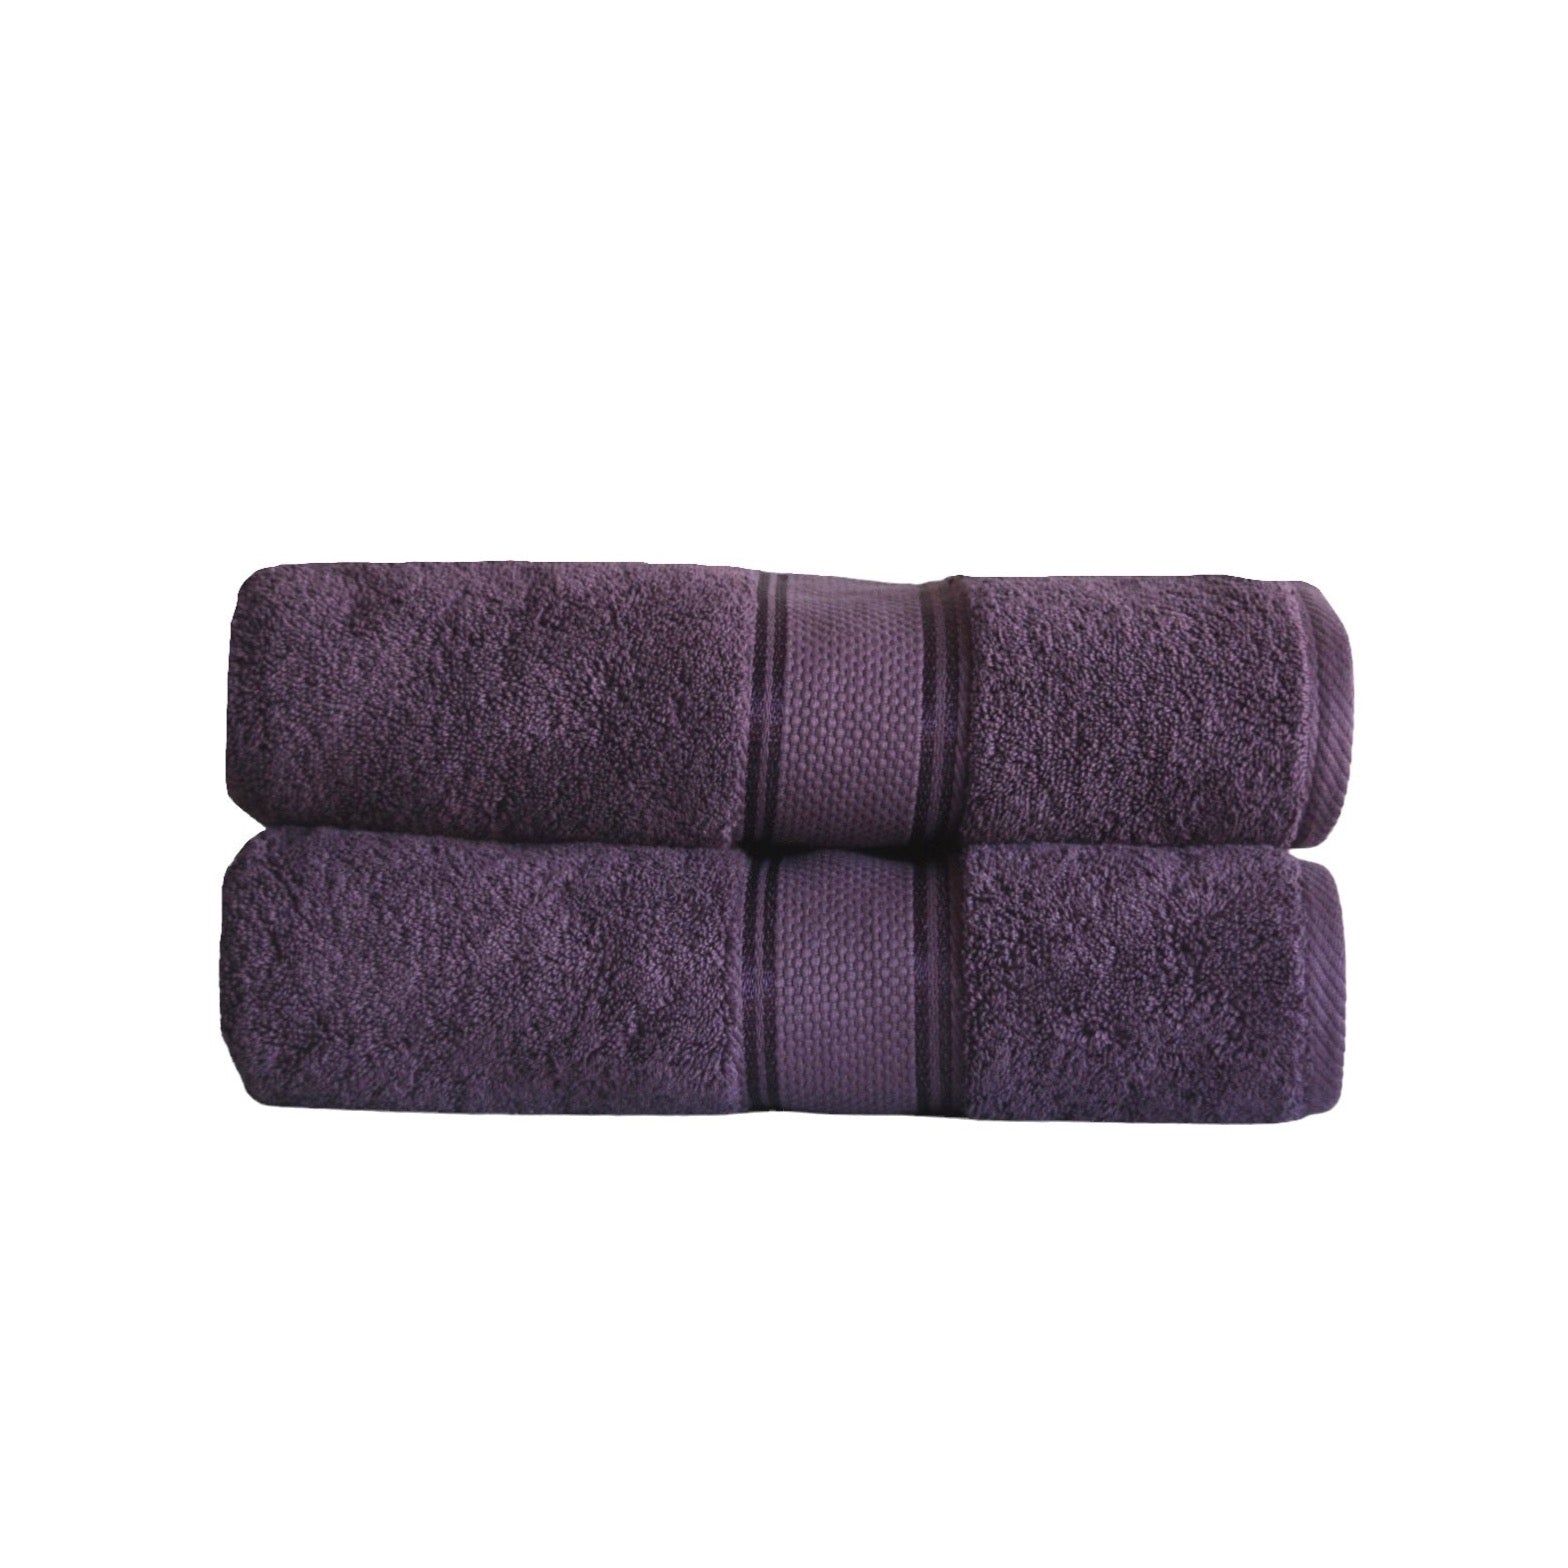 Turkish Cotton Towel Set in Dark Violet color